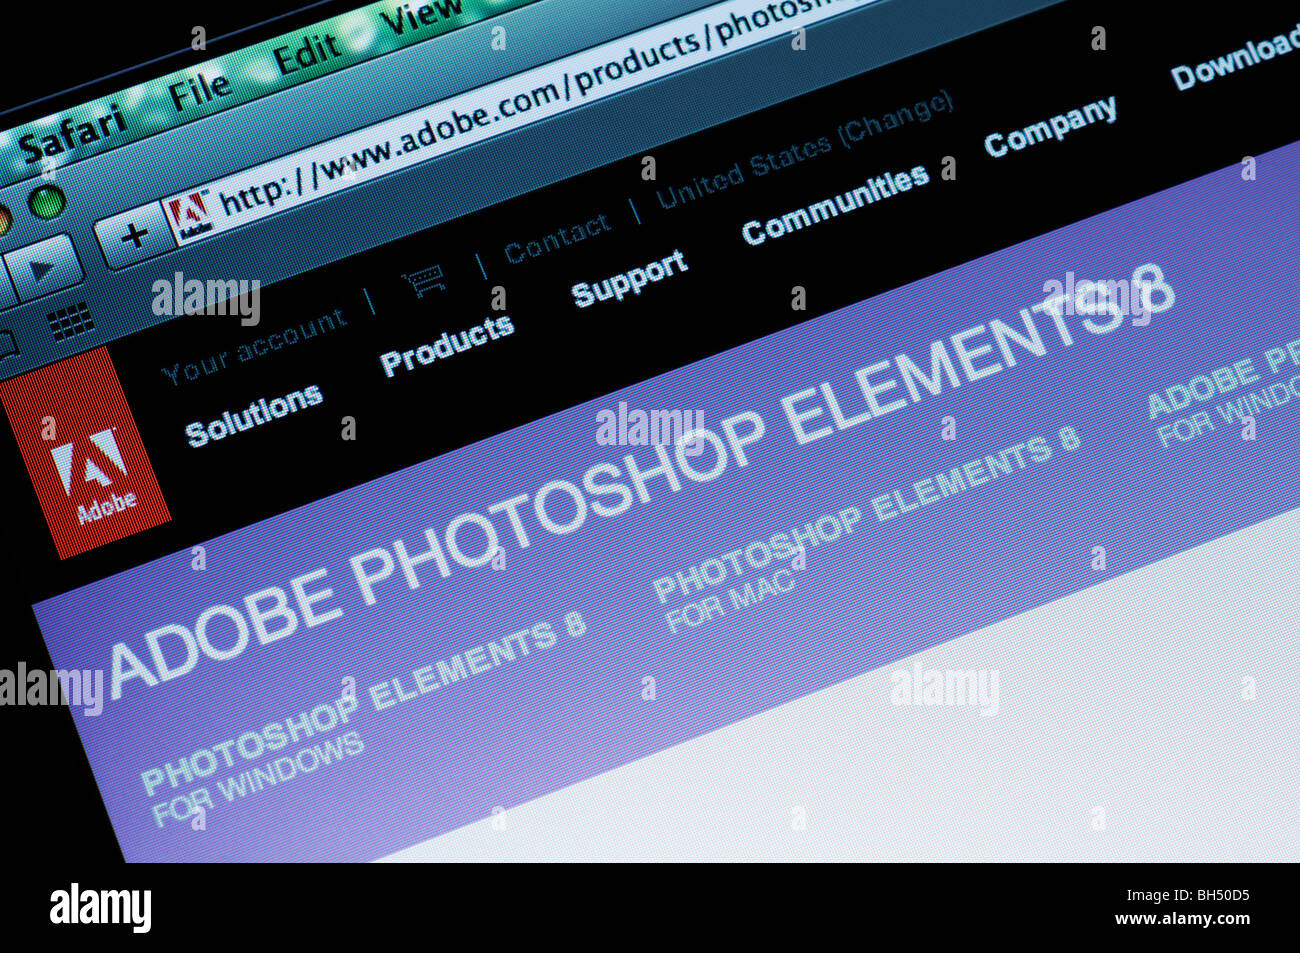 Adobe Photoshop Elements website Stock Photo